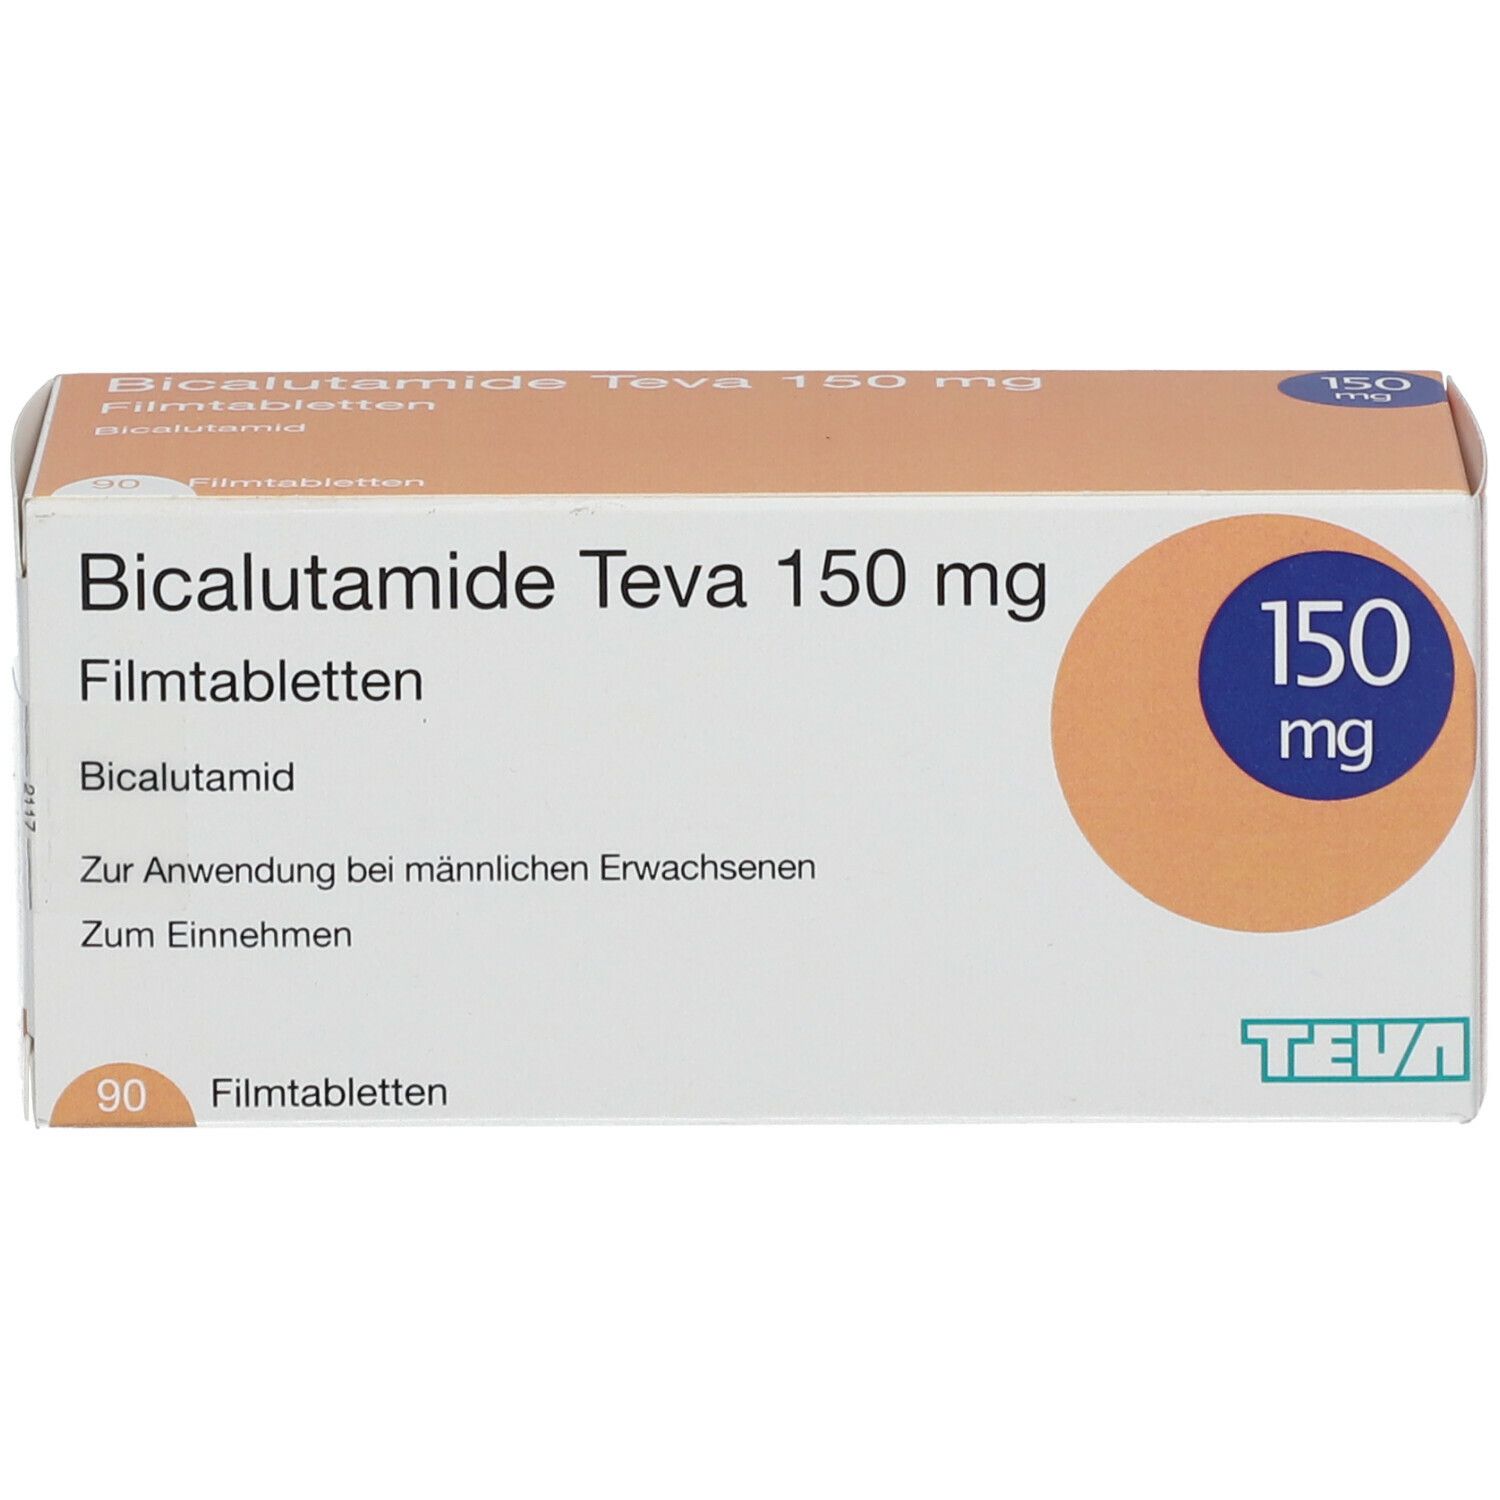 Bicalutamide Teva 150 mg